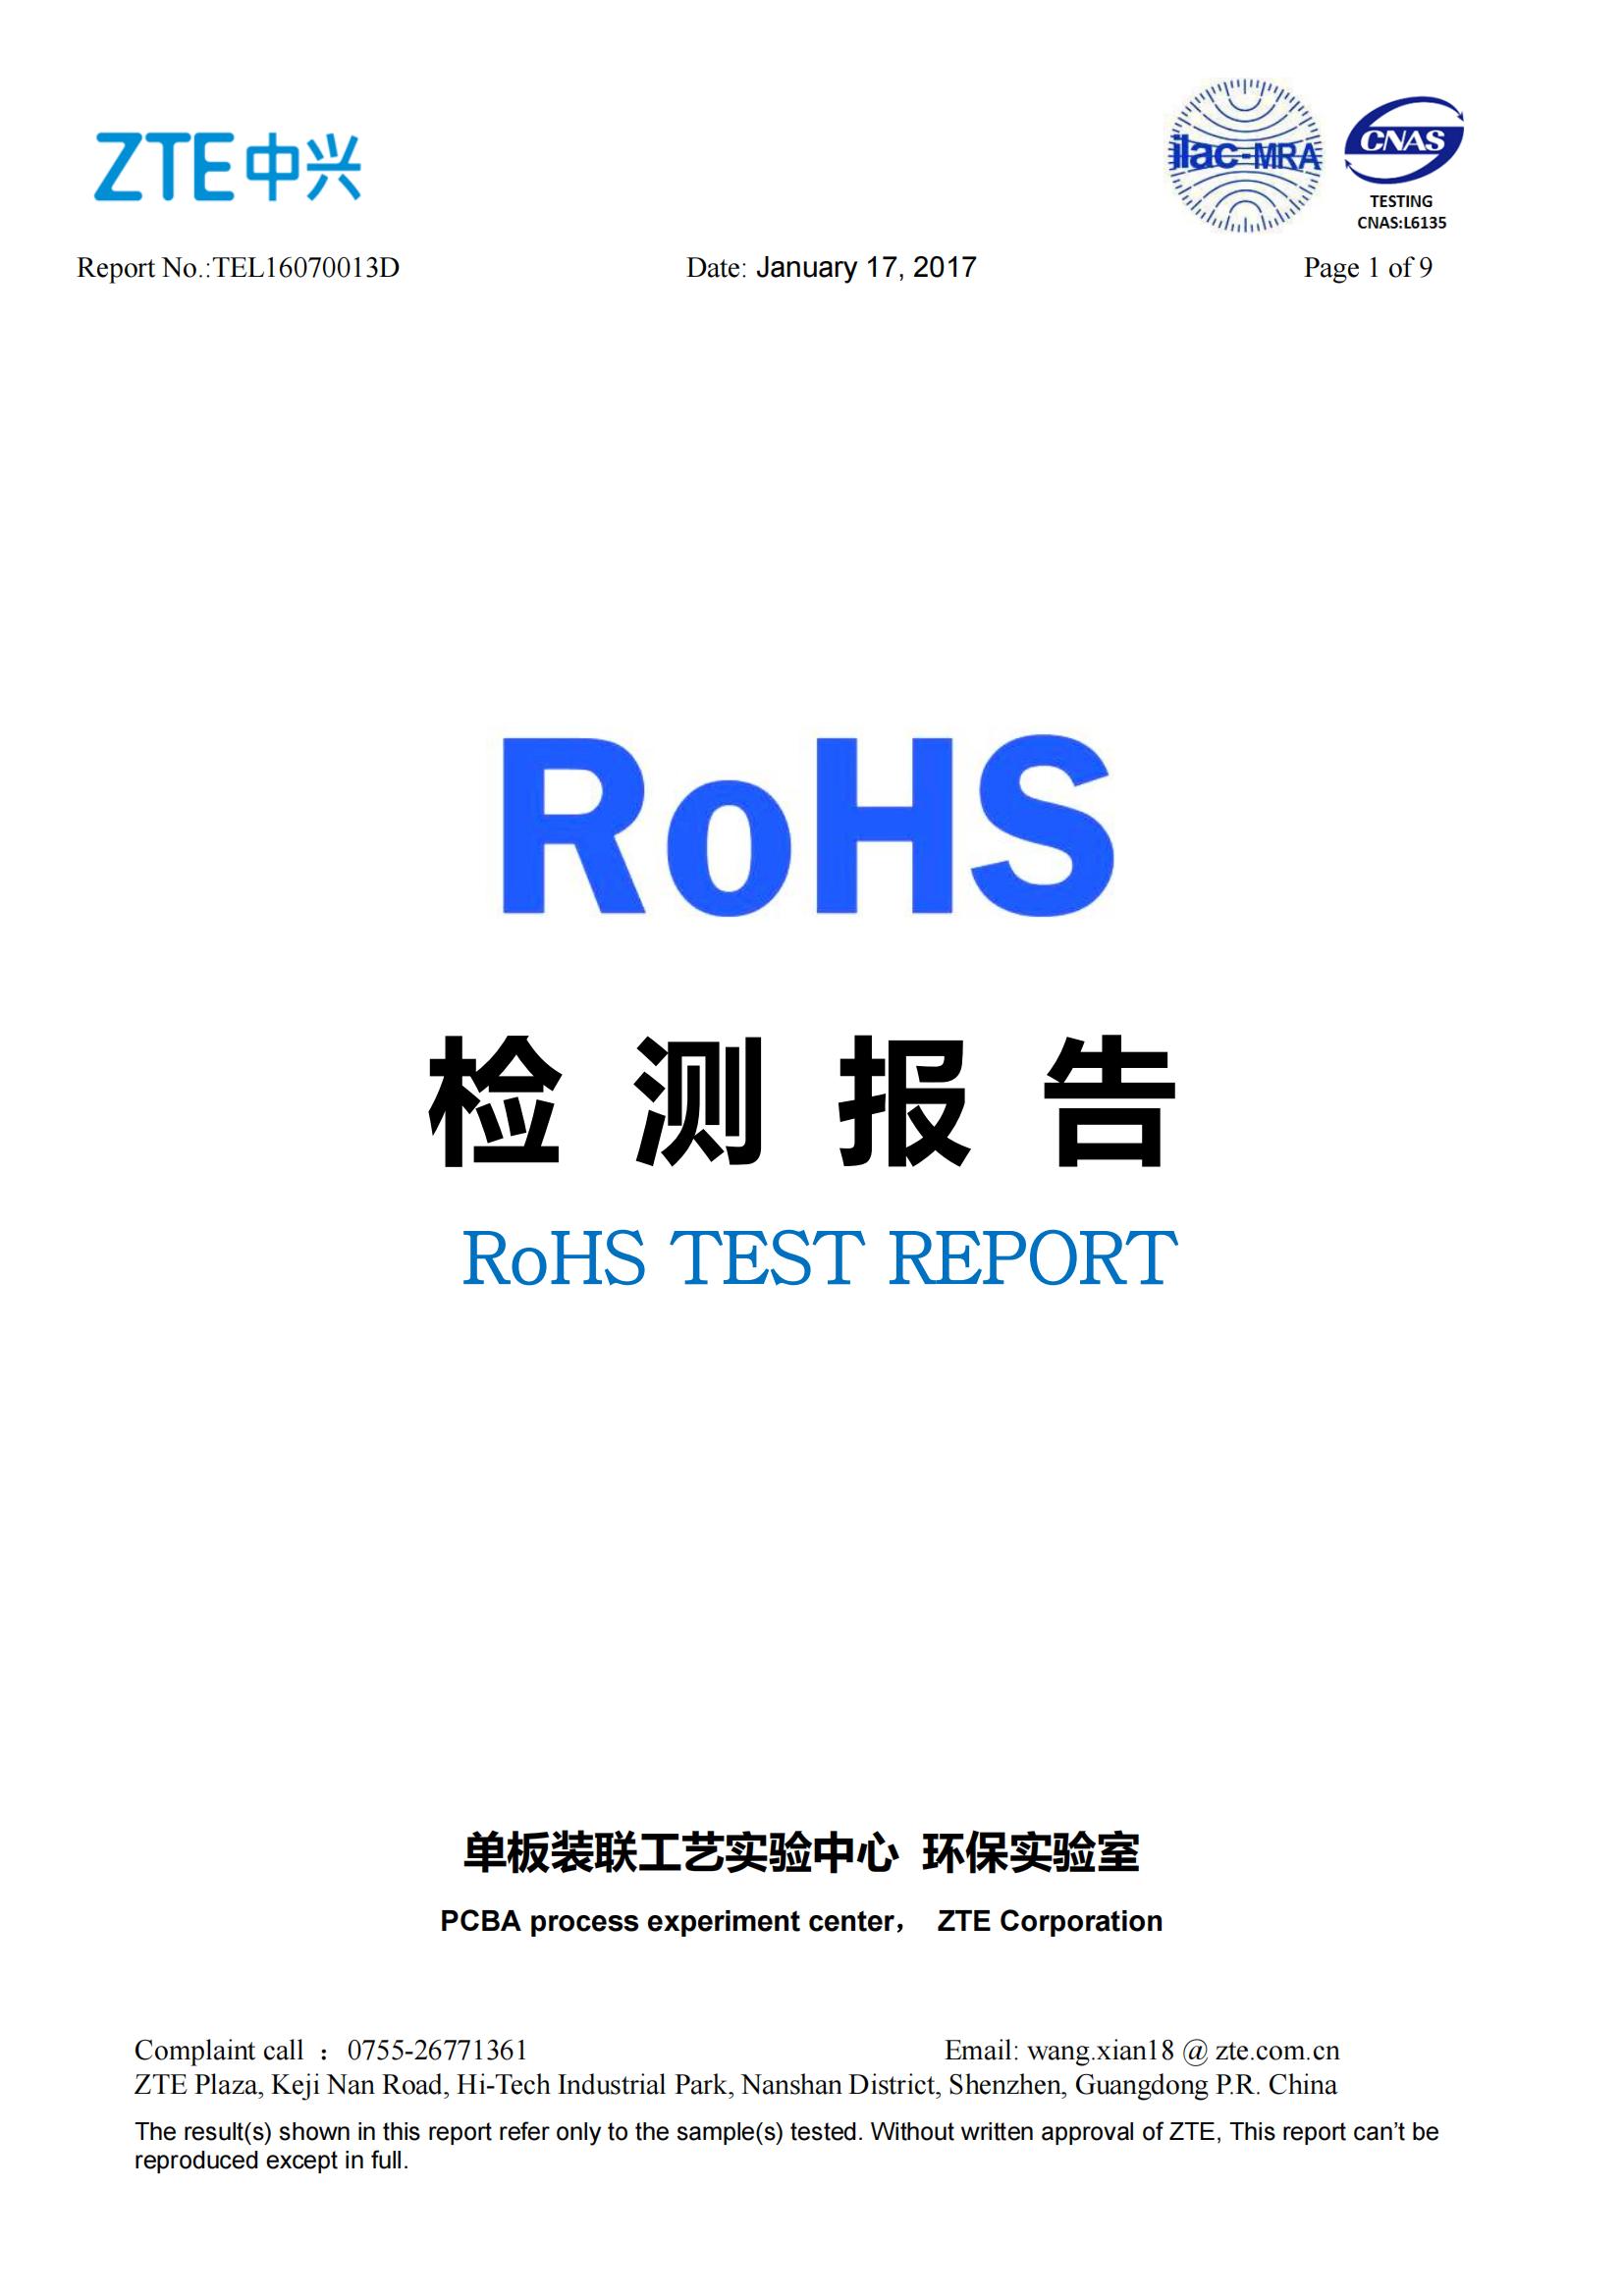 Water sensor ROHS test report